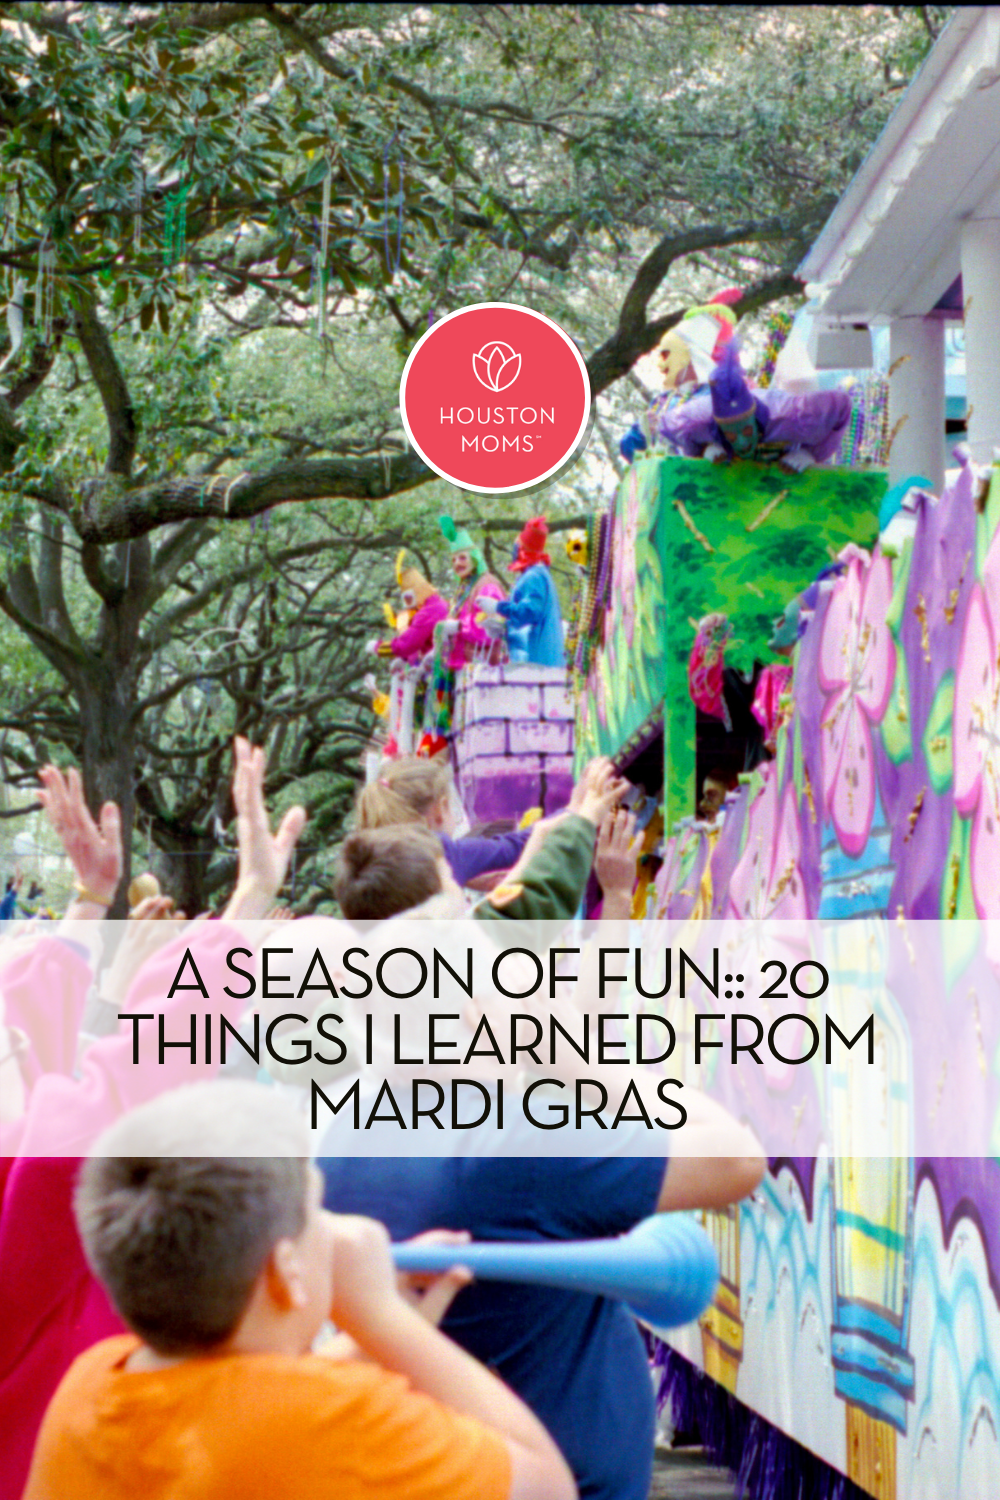 Houston Moms "A Season of Fun:: 20 Things I Learned From Mardi Gras" #houstonmoms #momsaroundhouston